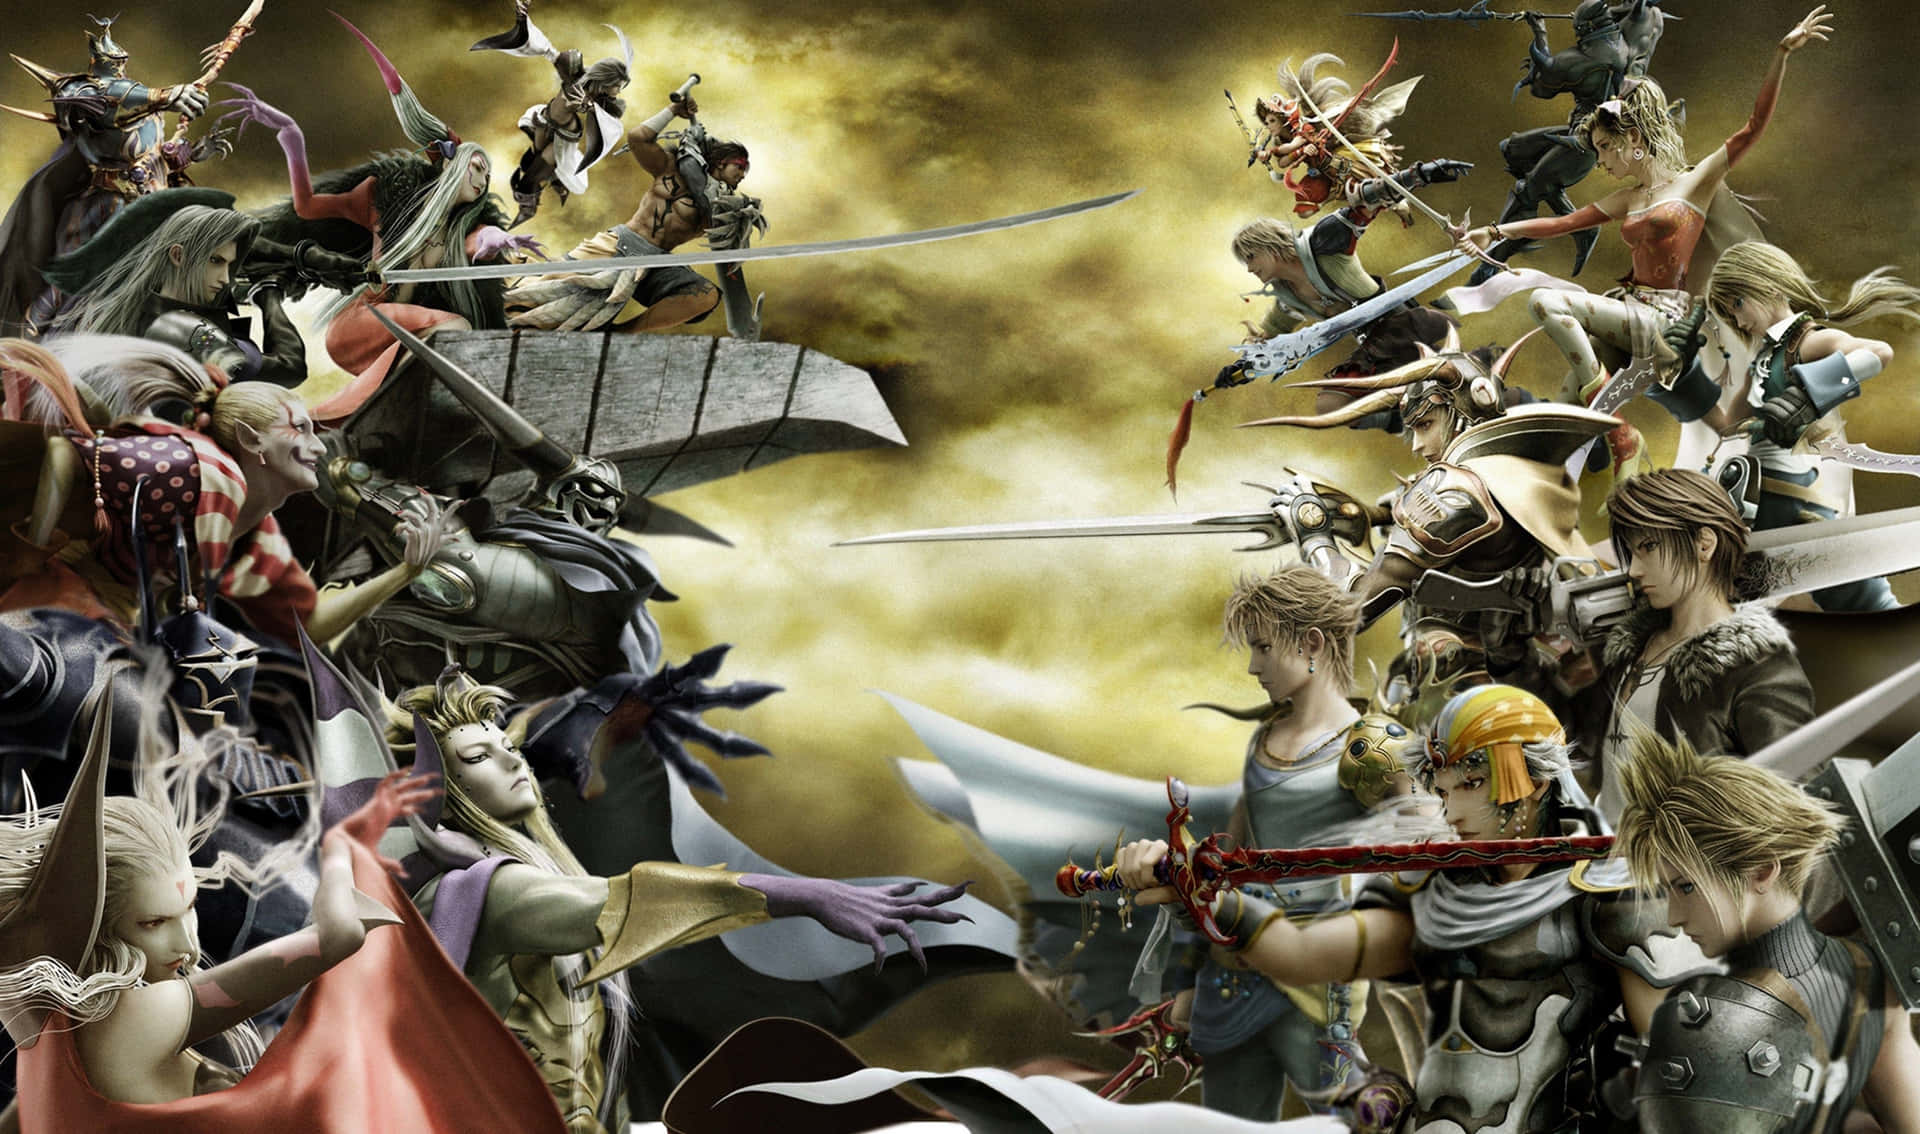 Epic Battle Scene From Final Fantasy Dissidia Wallpaper